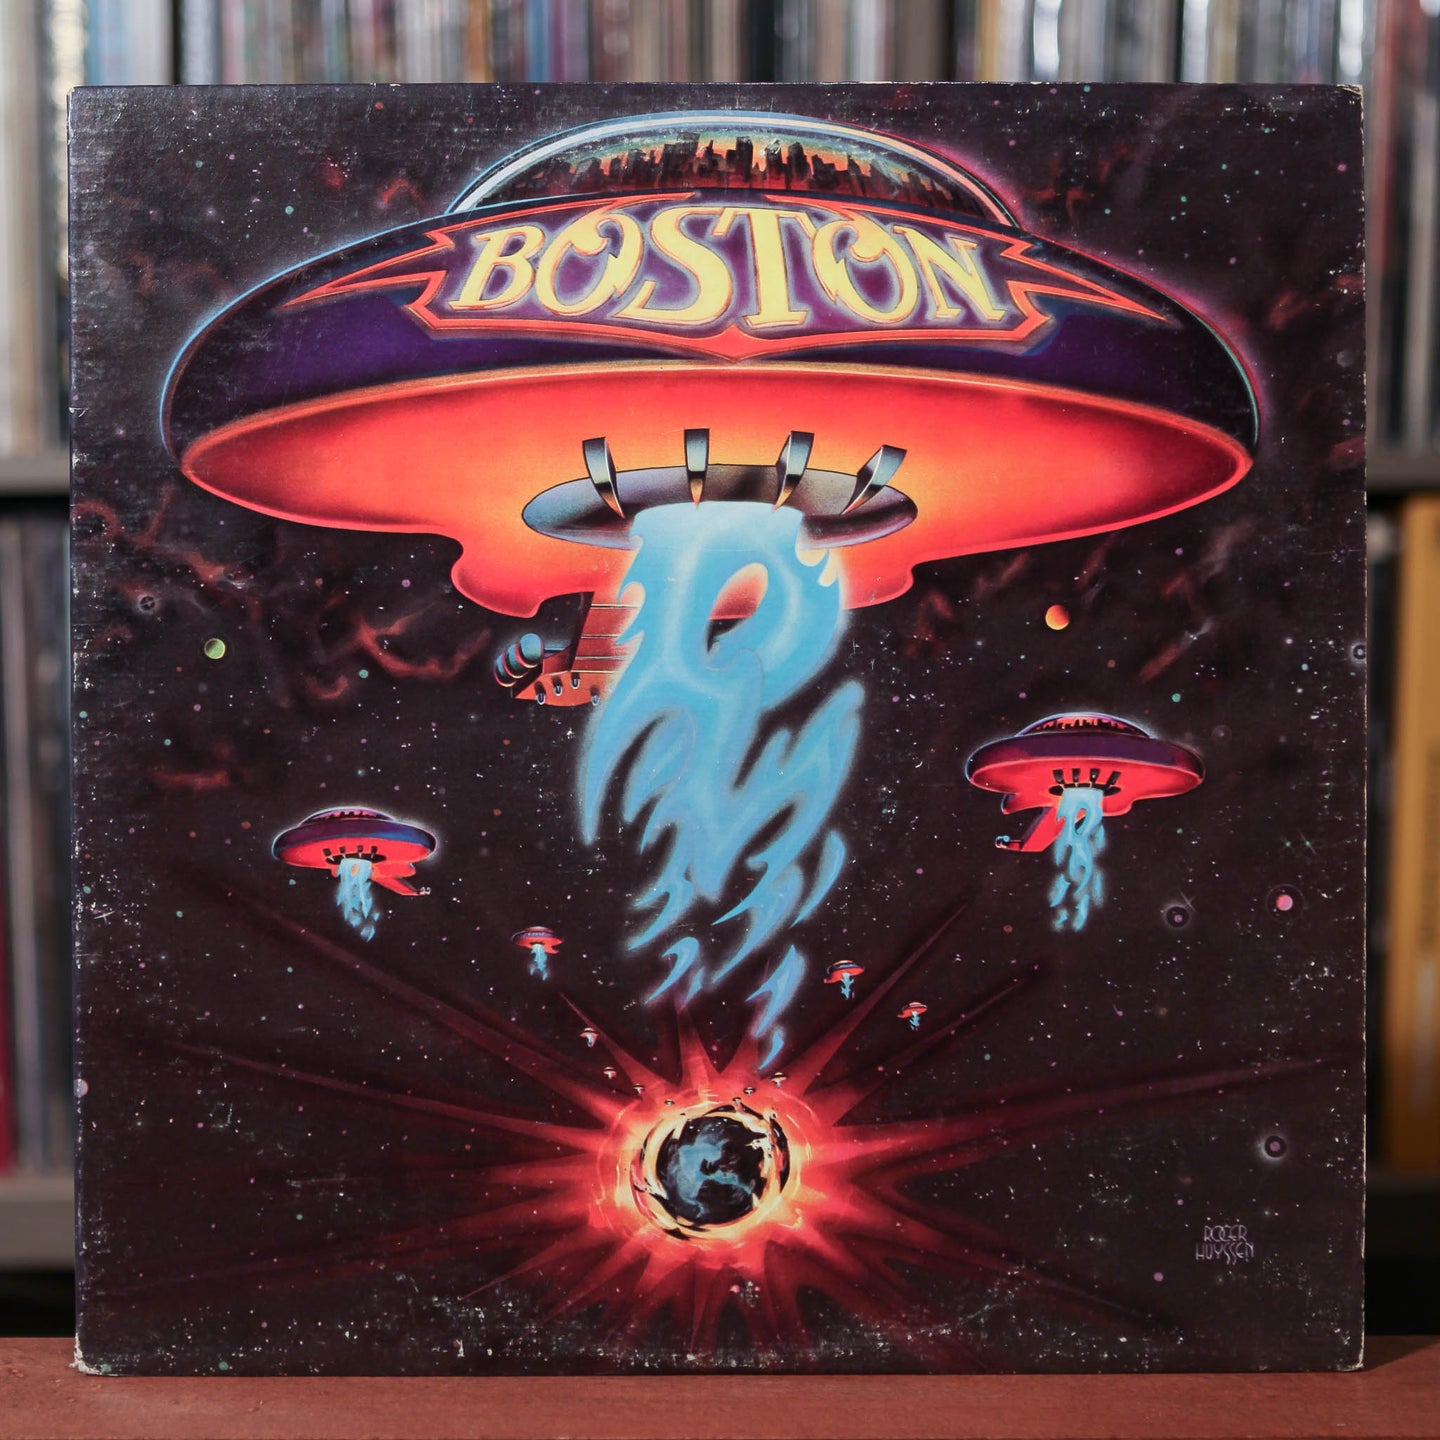 Boston - Self-Titled - 1976 Epic, VG+/VG+